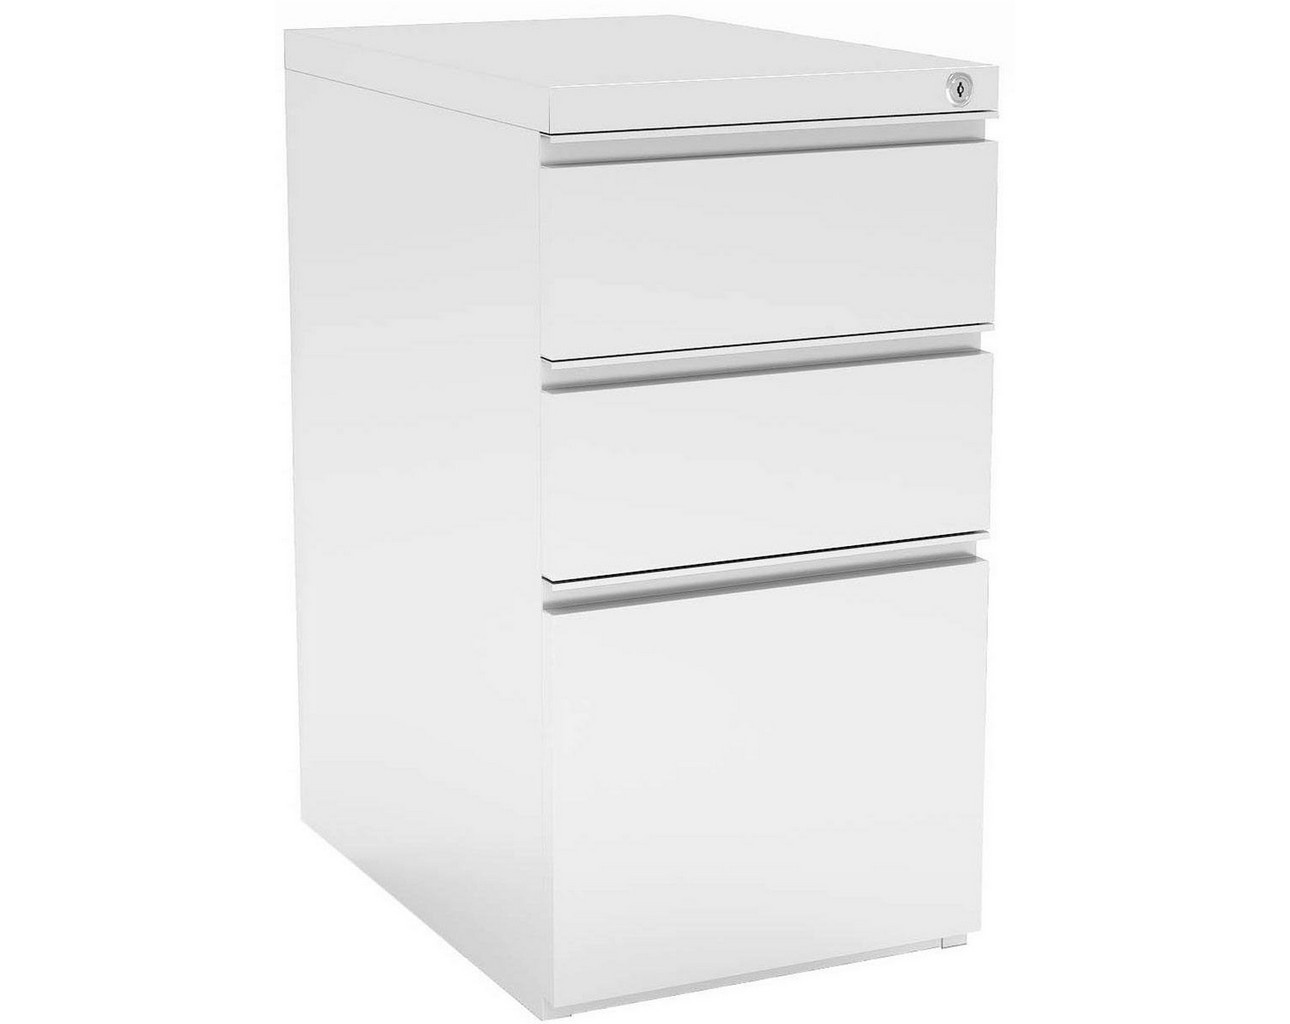 Premium Steel Metal Filing Cabinet - 3 Drawer in White